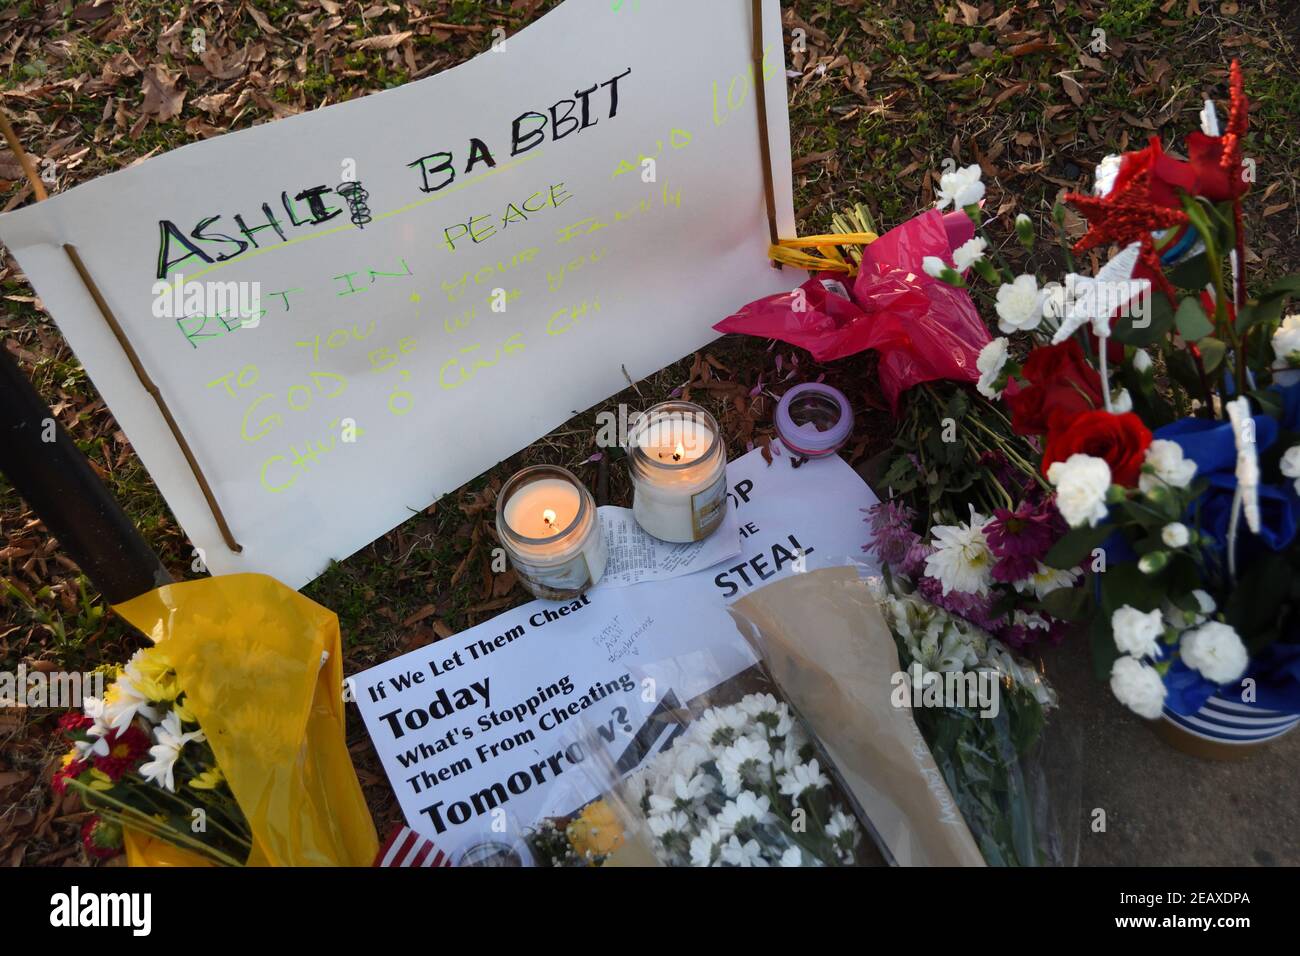 January 7, 2021: The makeshift memorial for Ashli Babbitt who was fatally shot inside the US Capitol in Washington DC on Jan 6th, 2021 Stock Photo